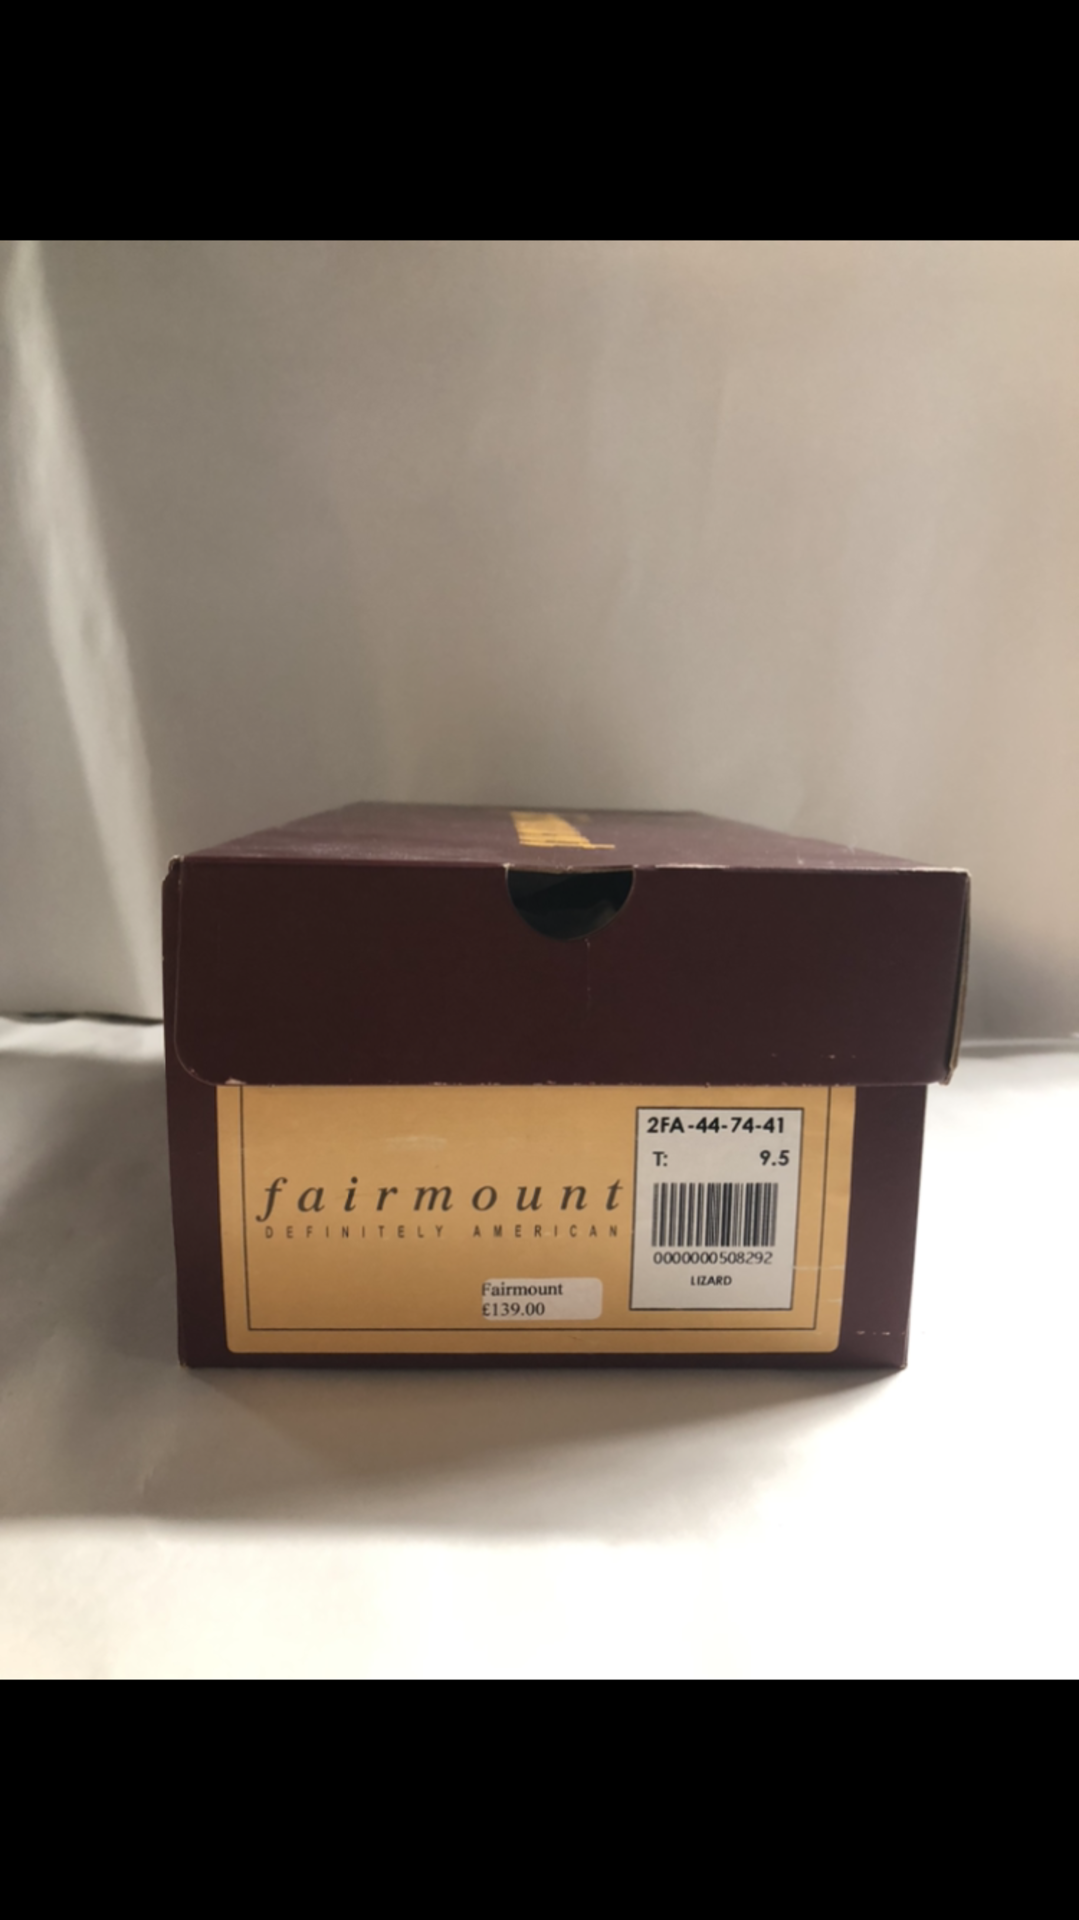 Fairmount Slip On Loafers.UK 9.5 RRP£139.00 - Image 2 of 2